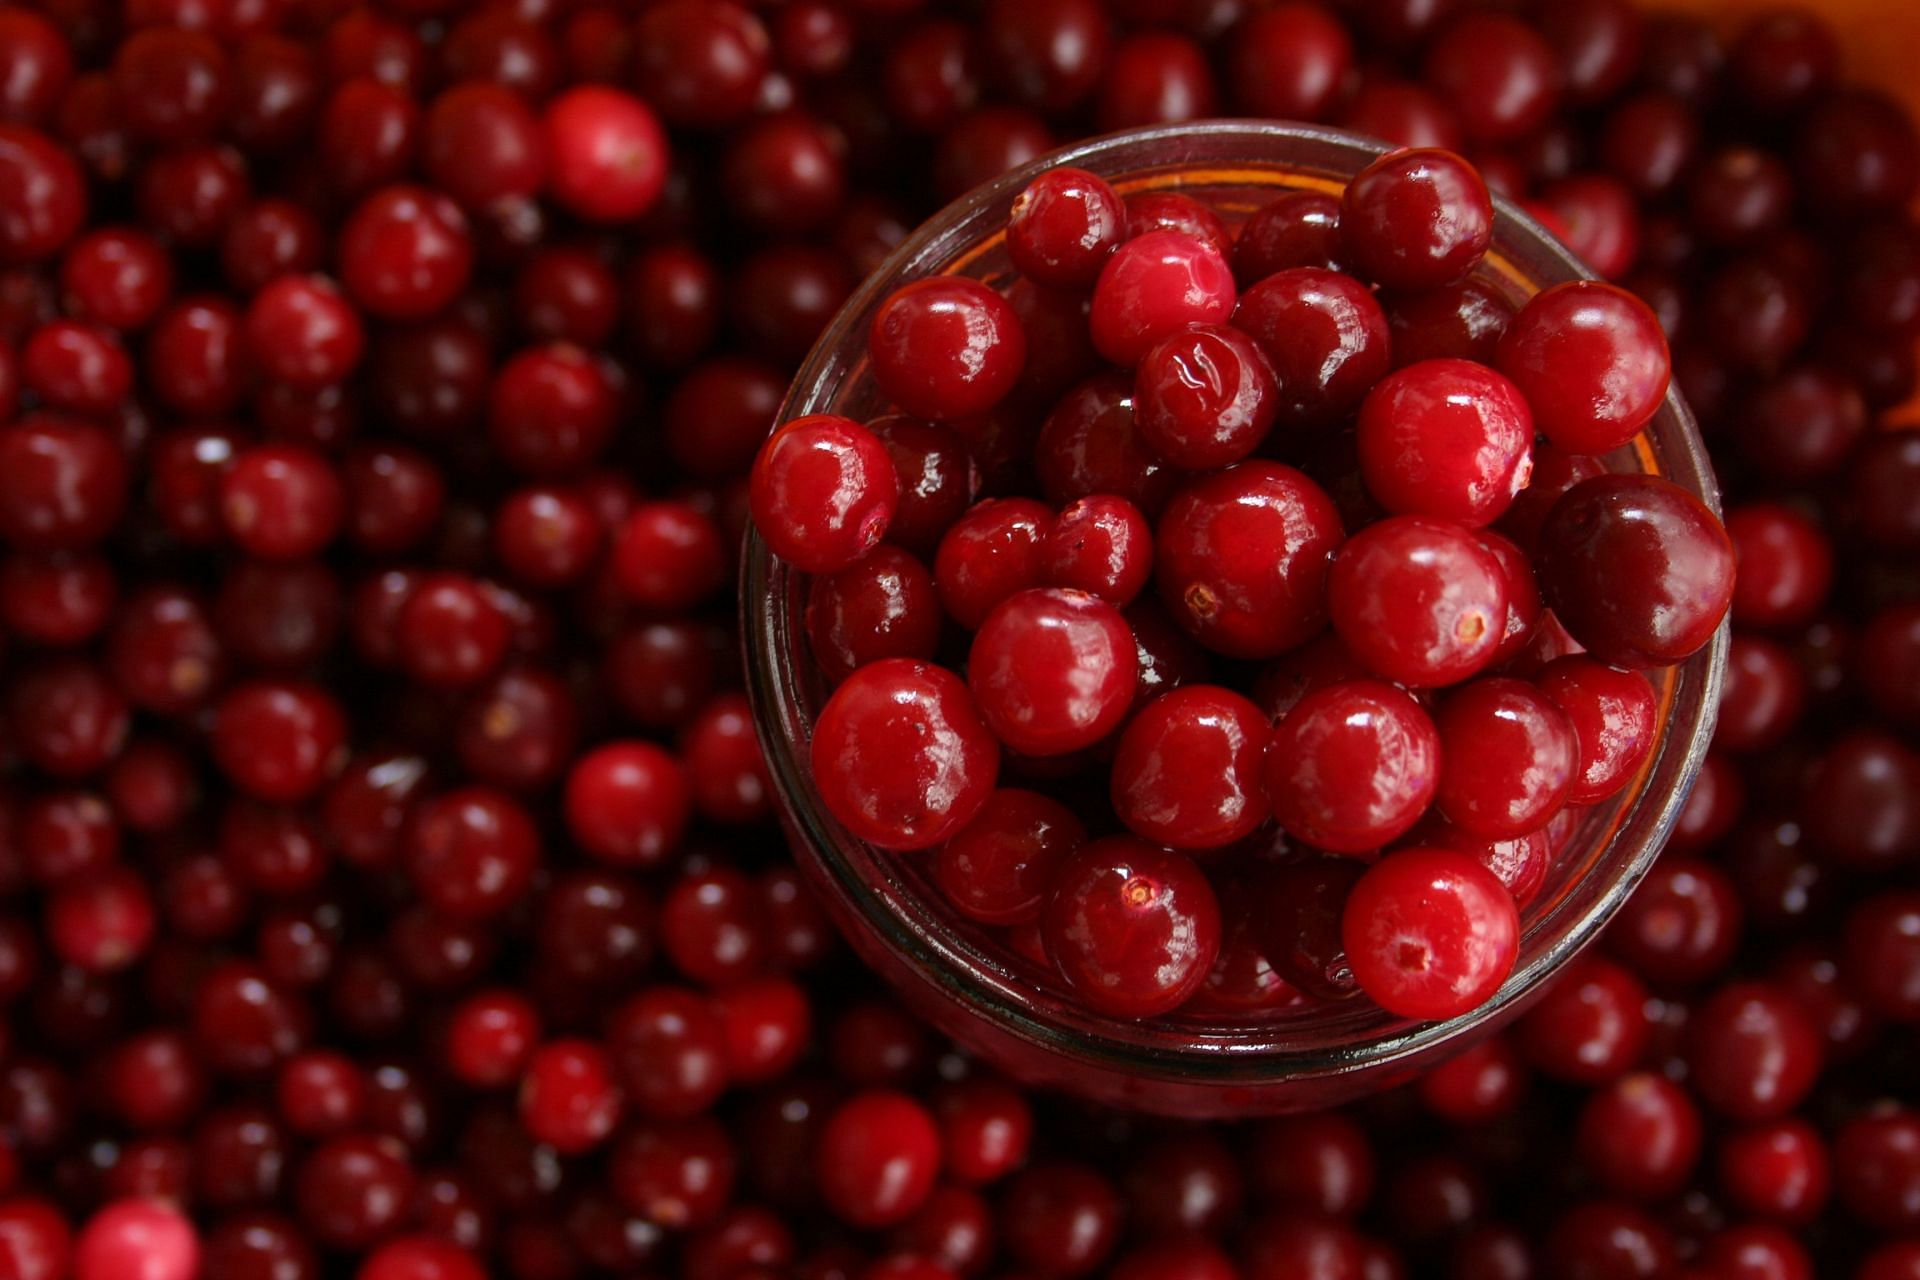 Cherries for fresh breath (image sourced via Pexels / Photo by Irita)